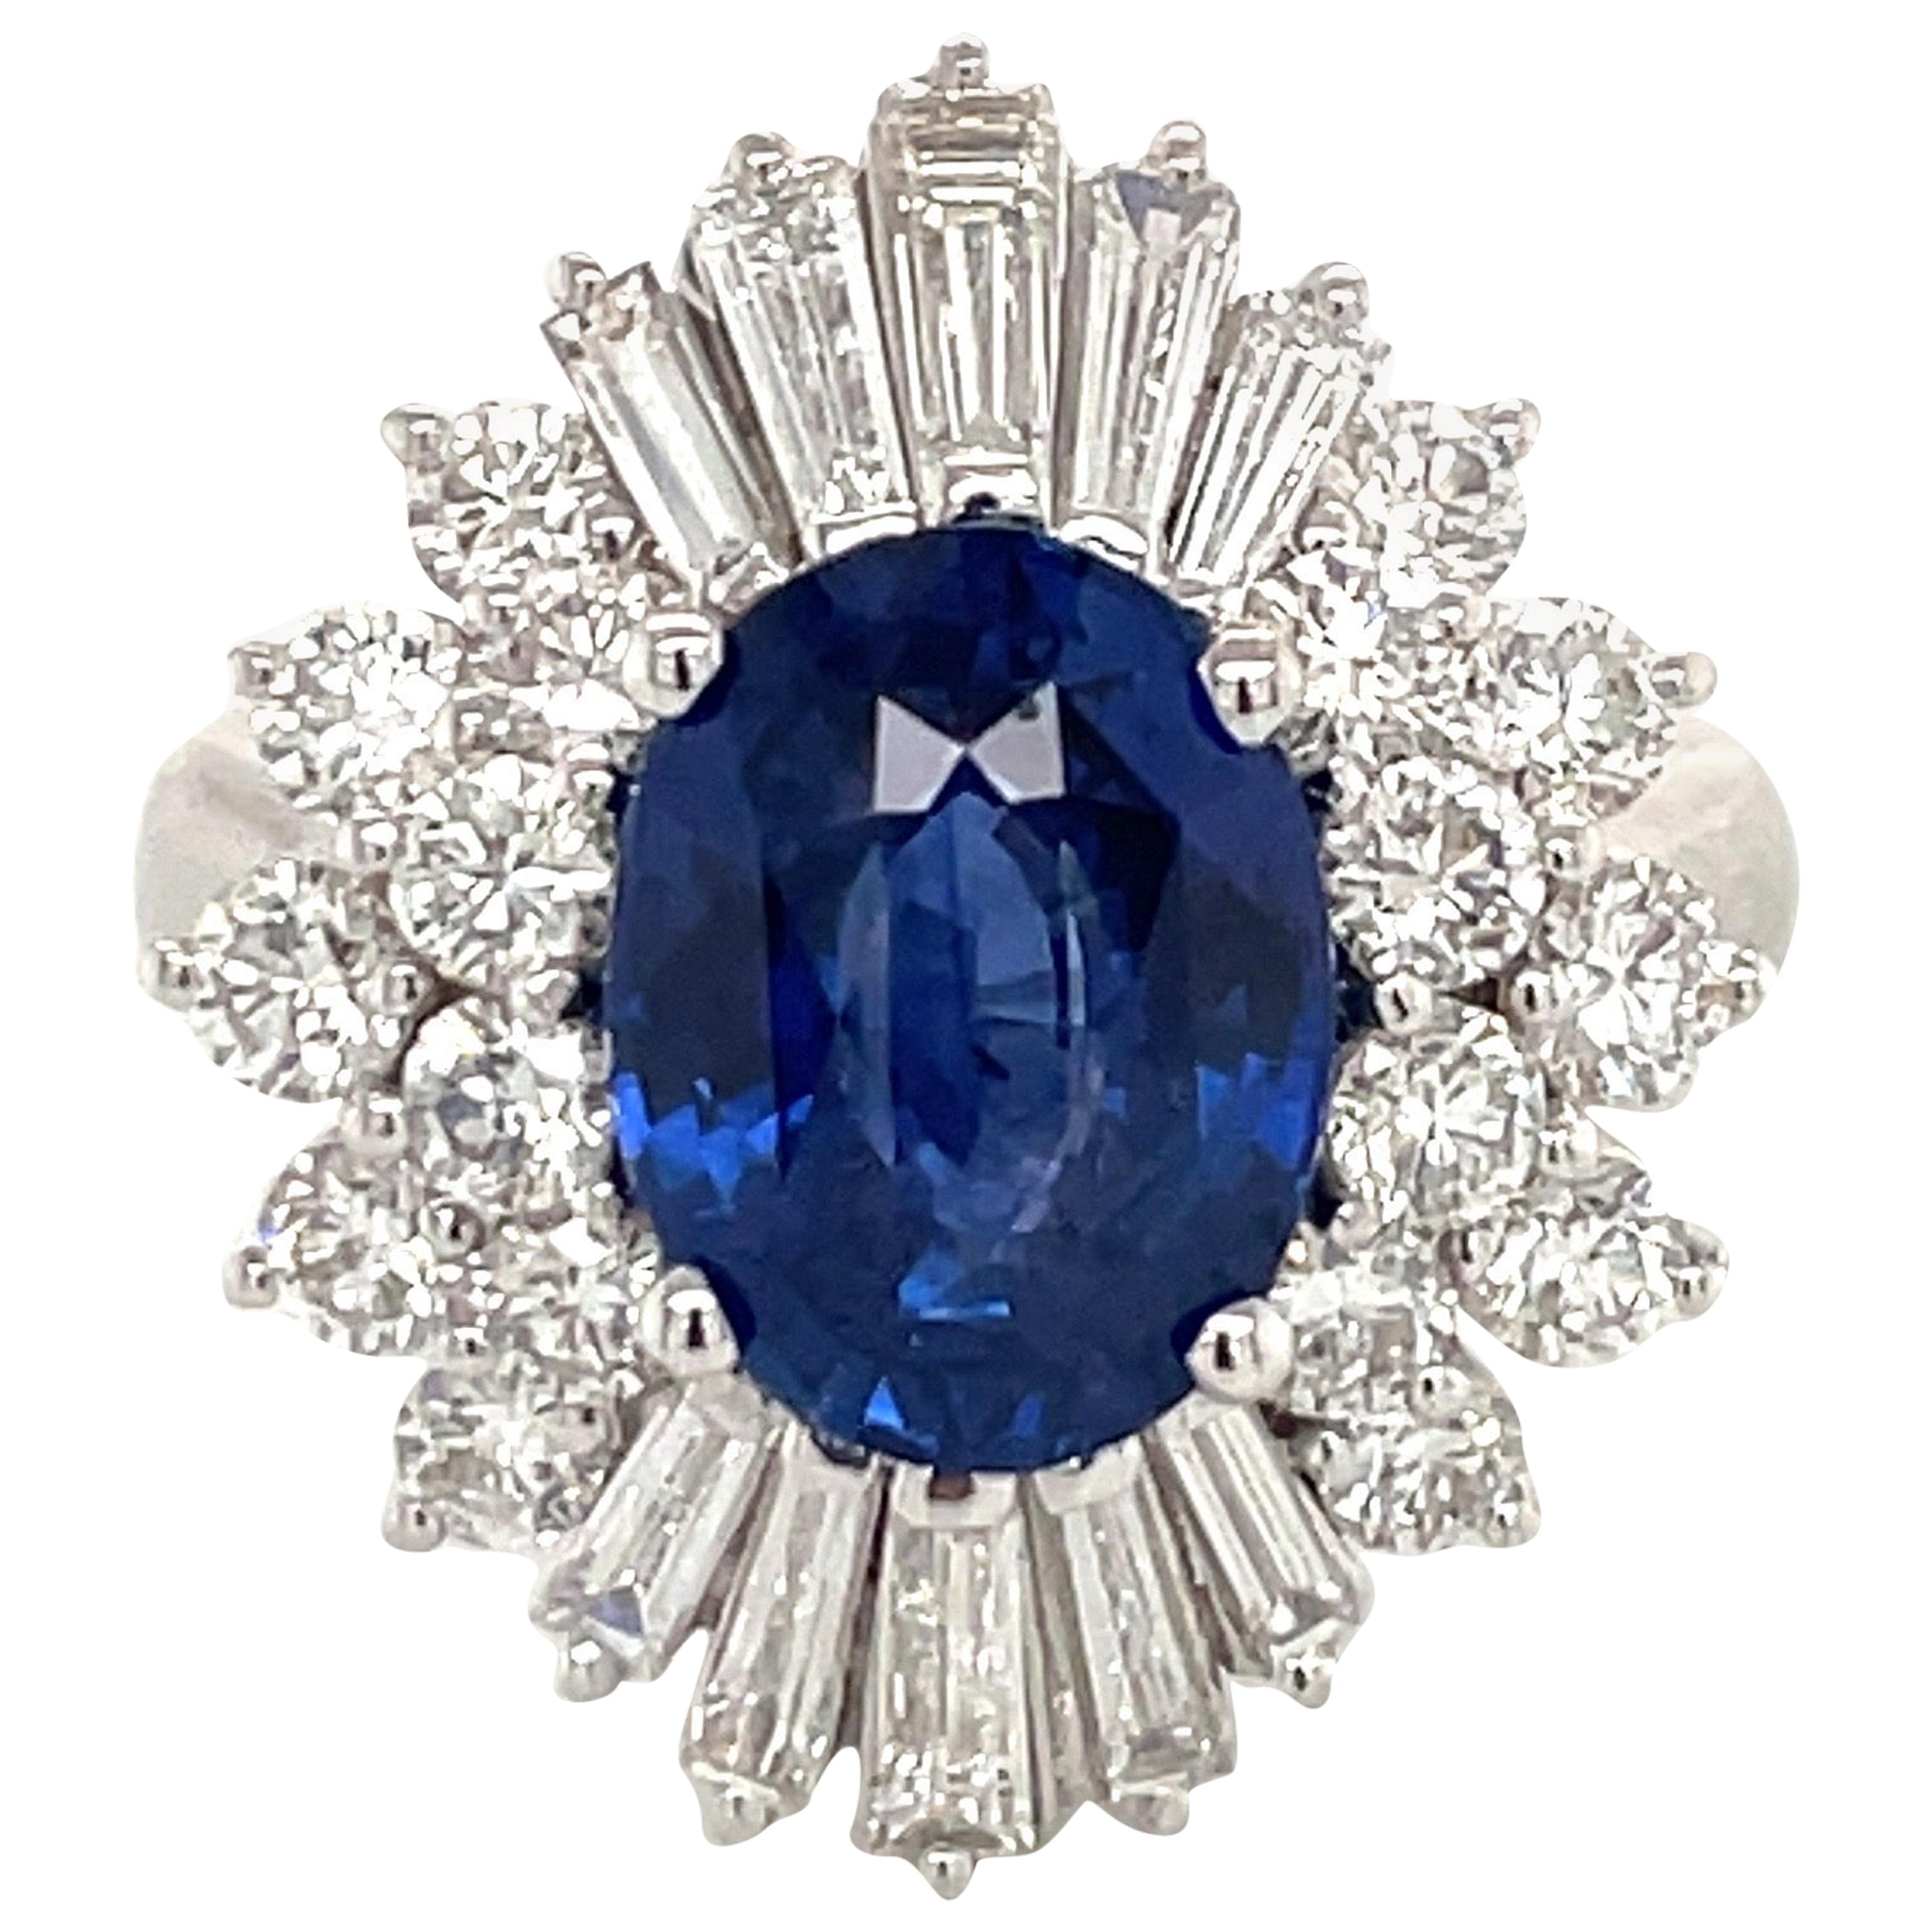 HARBOR D. Sapphire Diamond Cluster Cocktail Ring 7.47 Carat Platinum